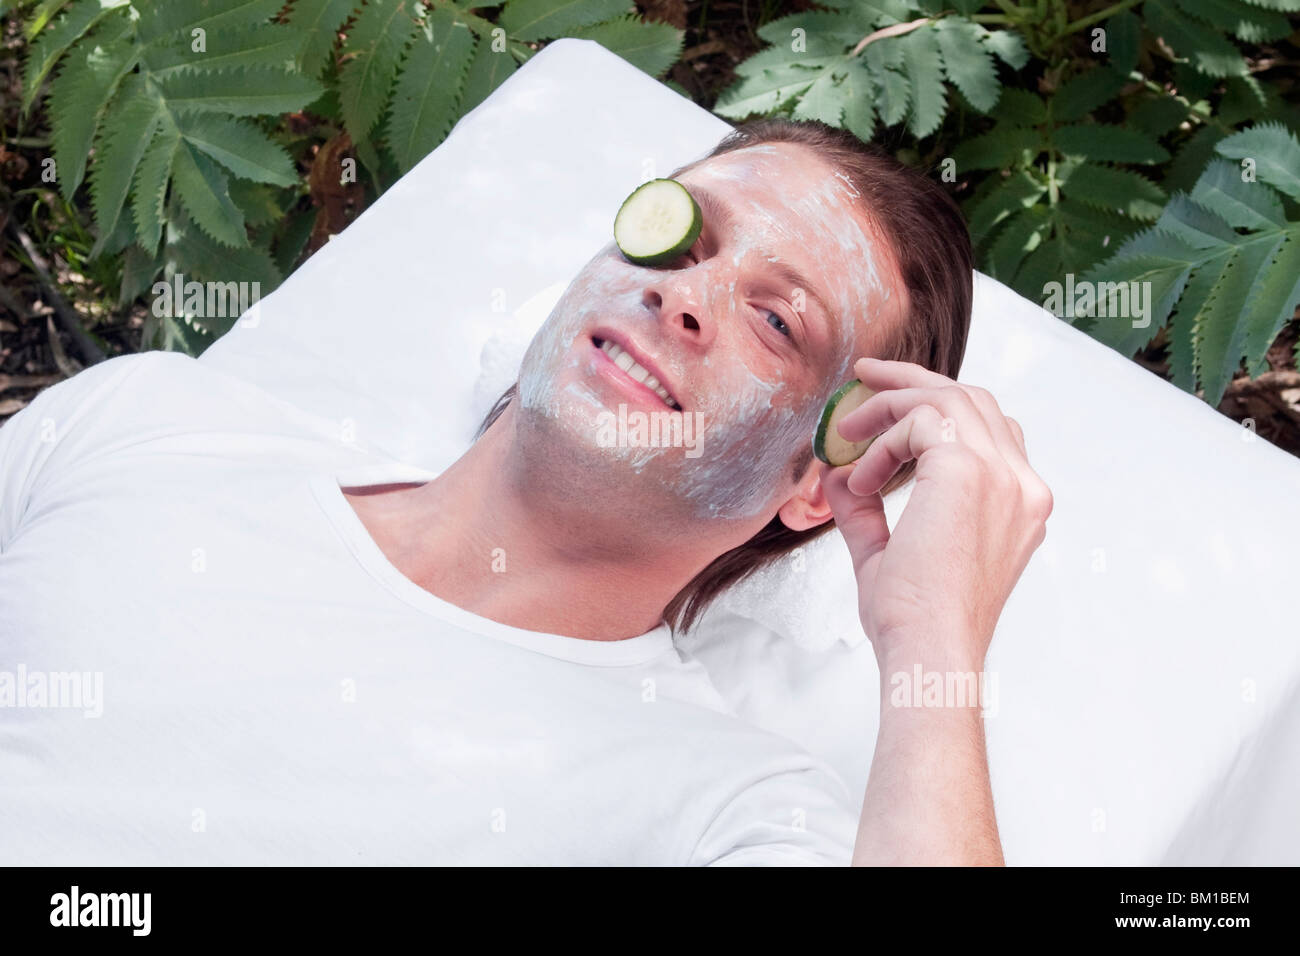 Cucumber slice on a man's eye Stock Photo